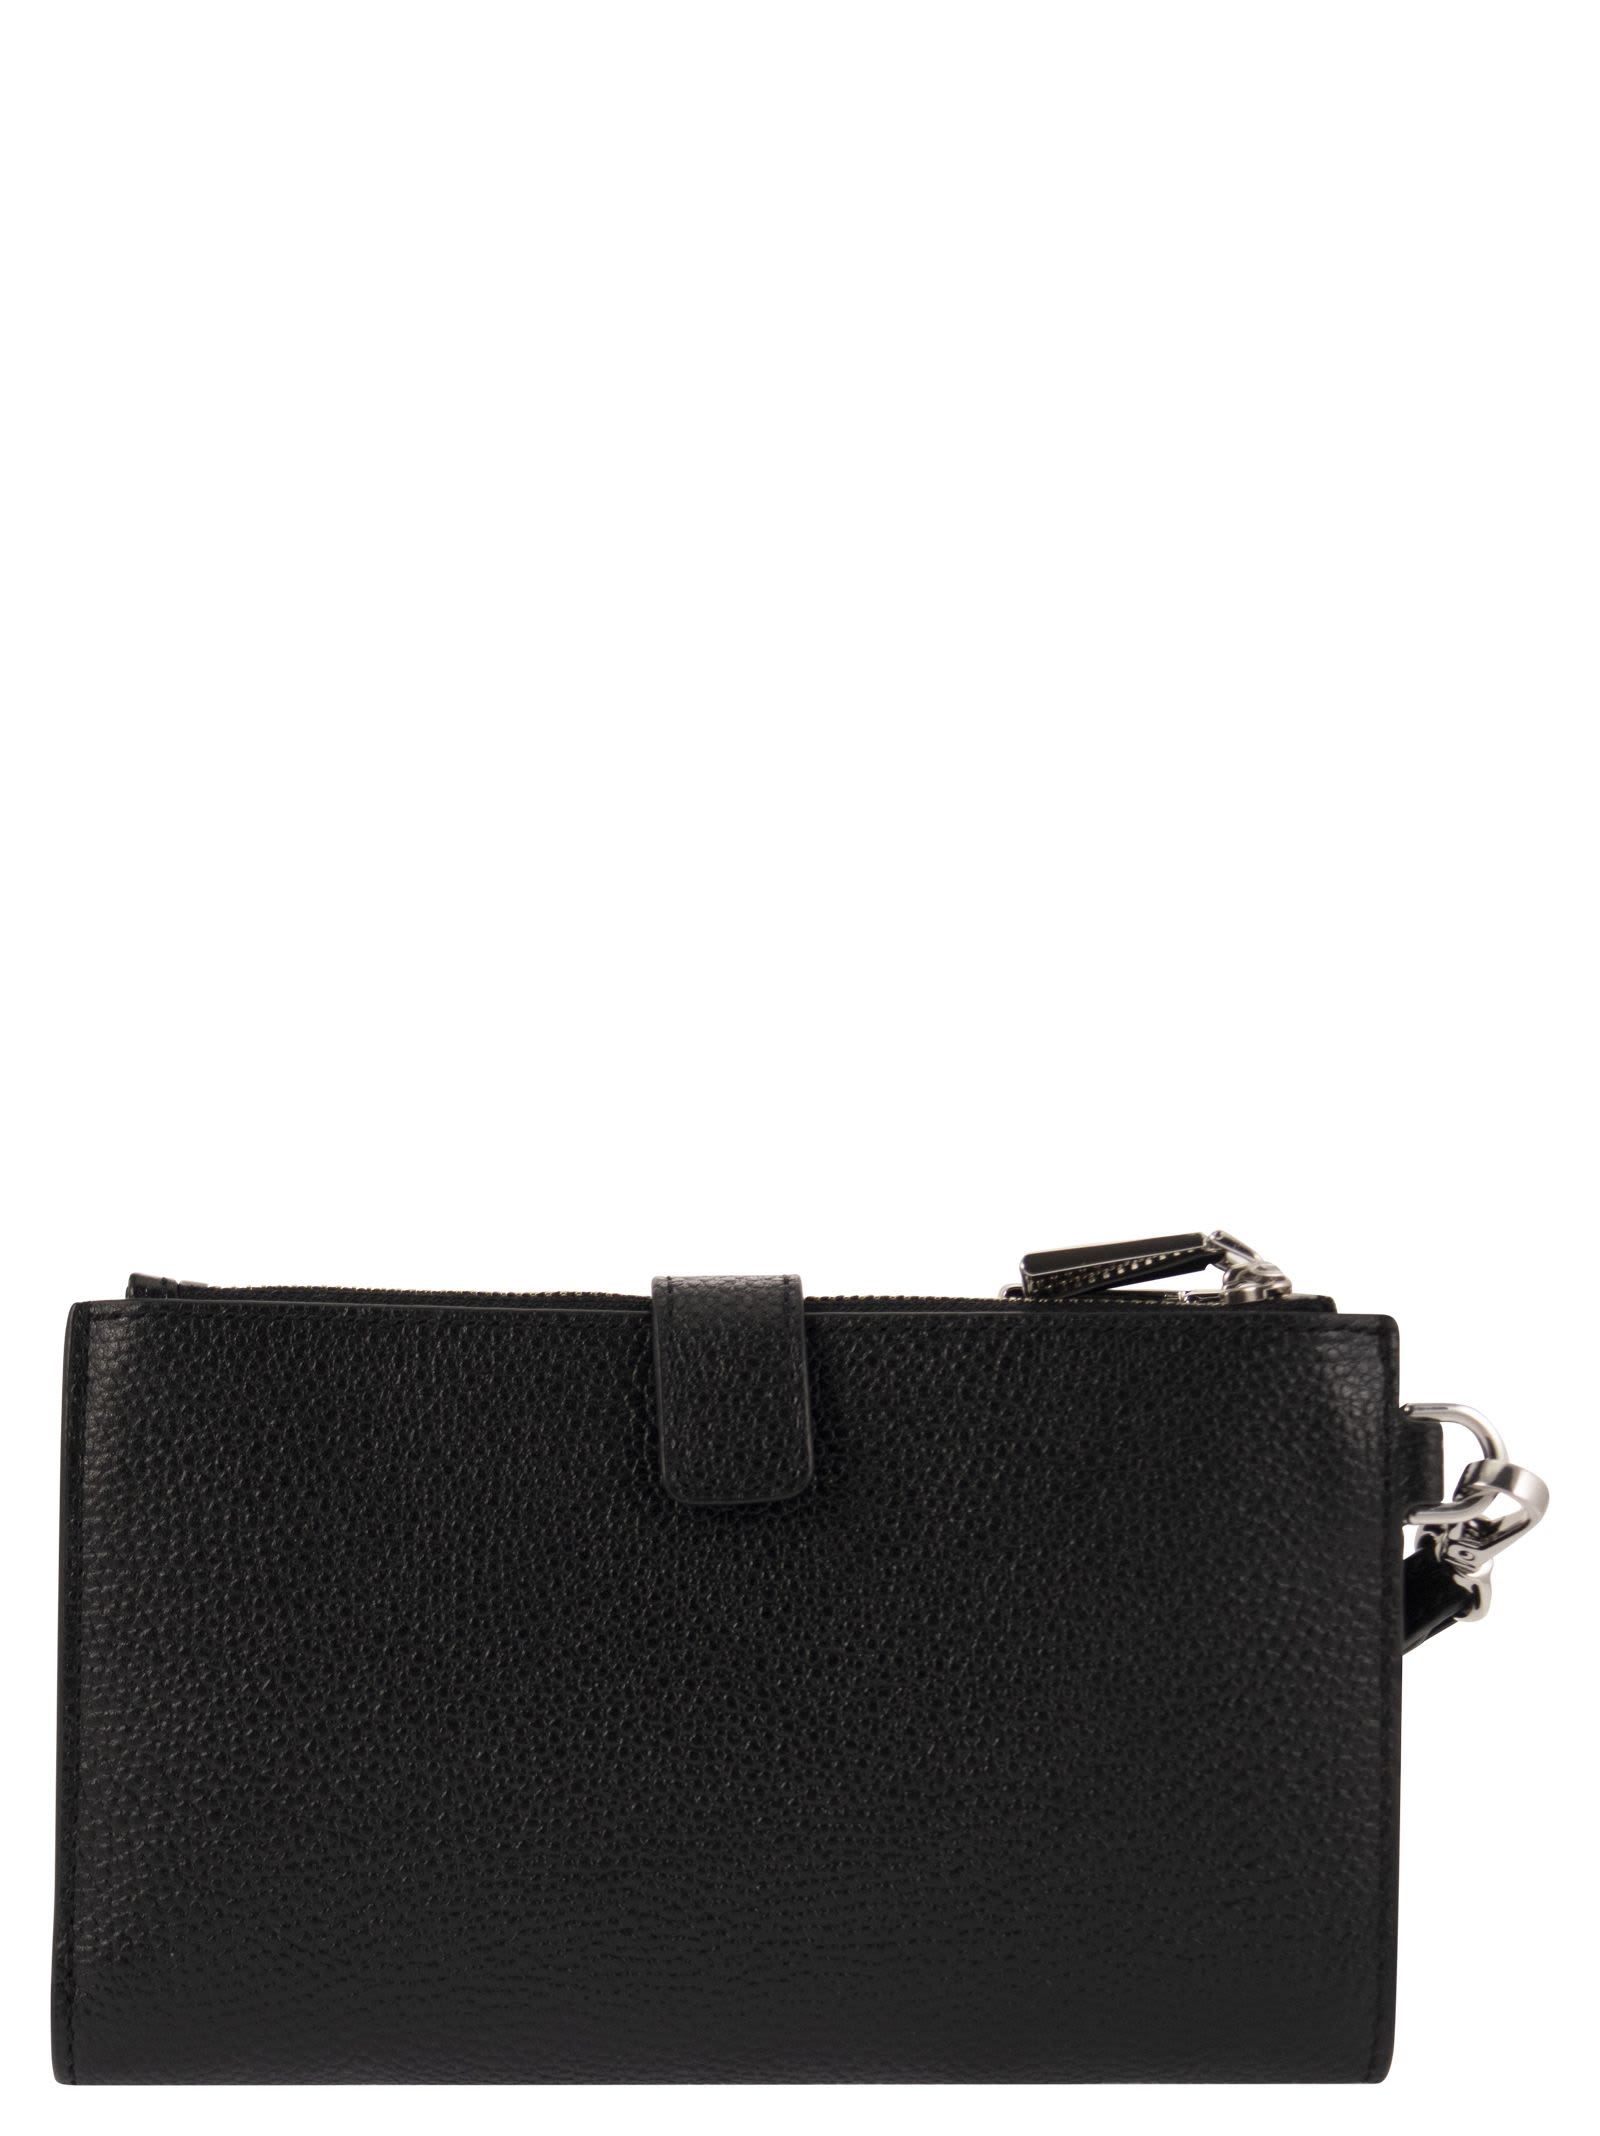 Shop Michael Kors Grained Leather Smartphone Wallet In Black